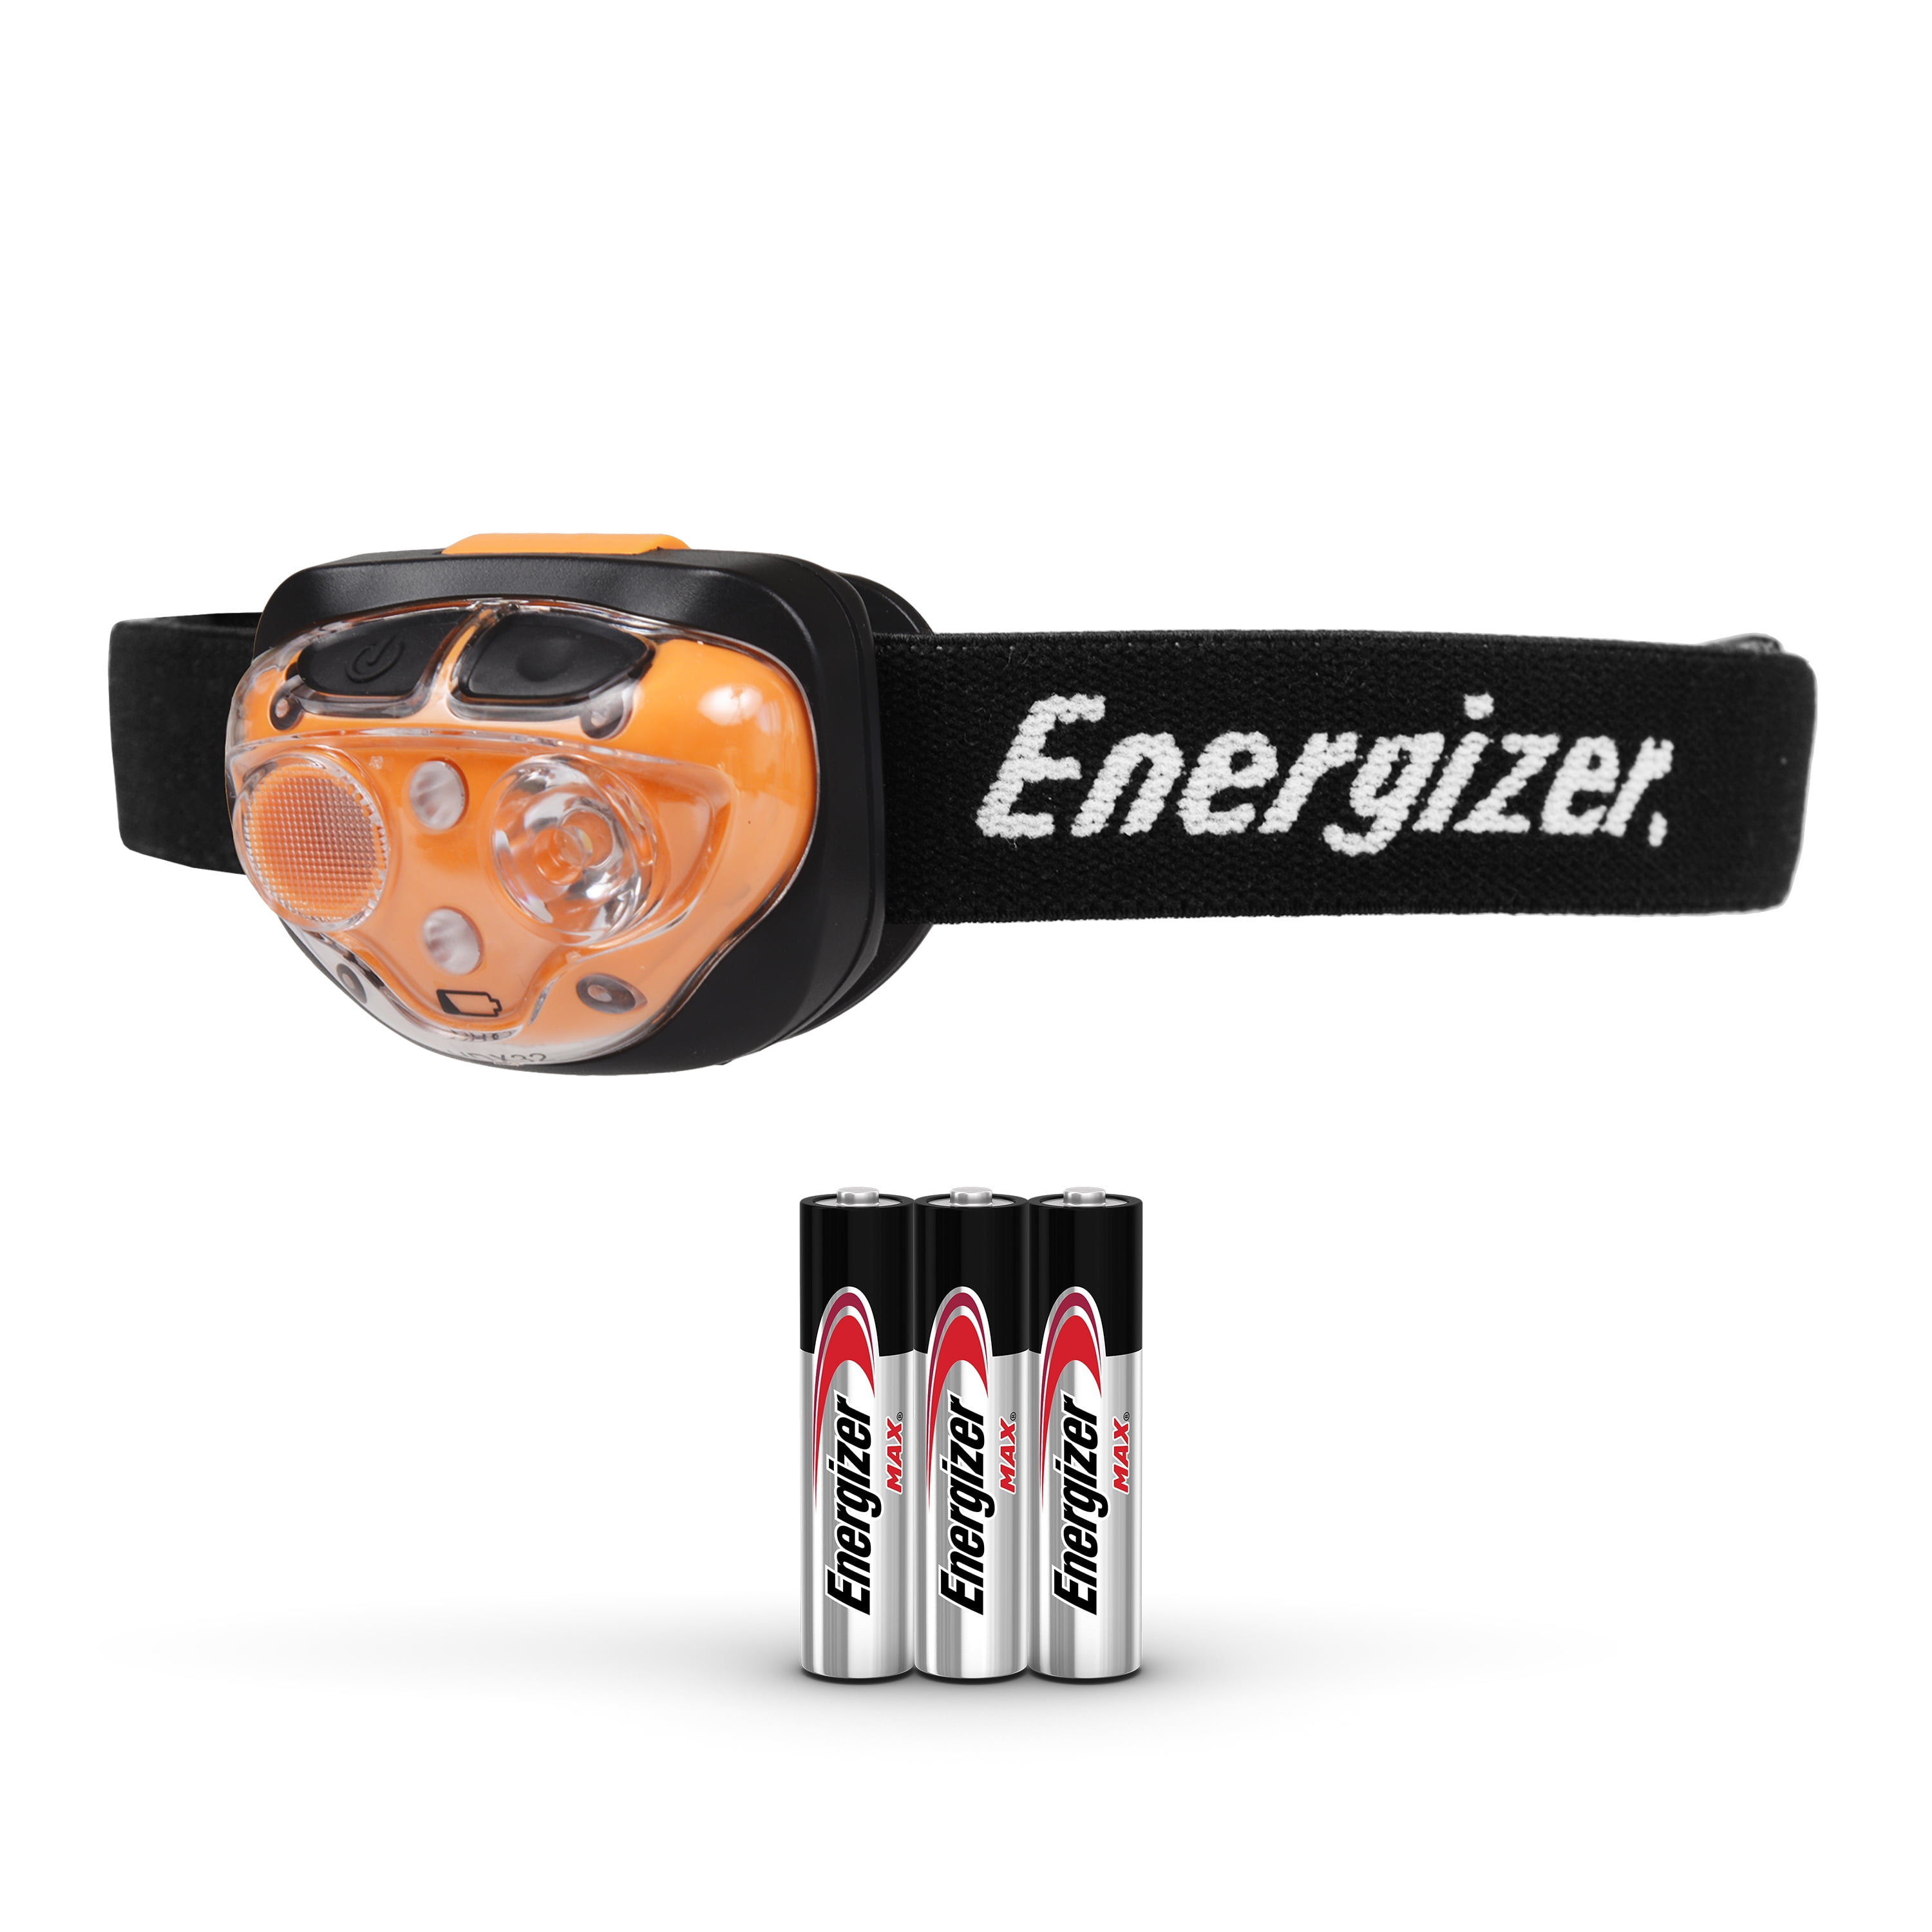 Energizer Vision Ultra LED Headlight 450 lumens Headlamp 3 AAA batteries Torch 